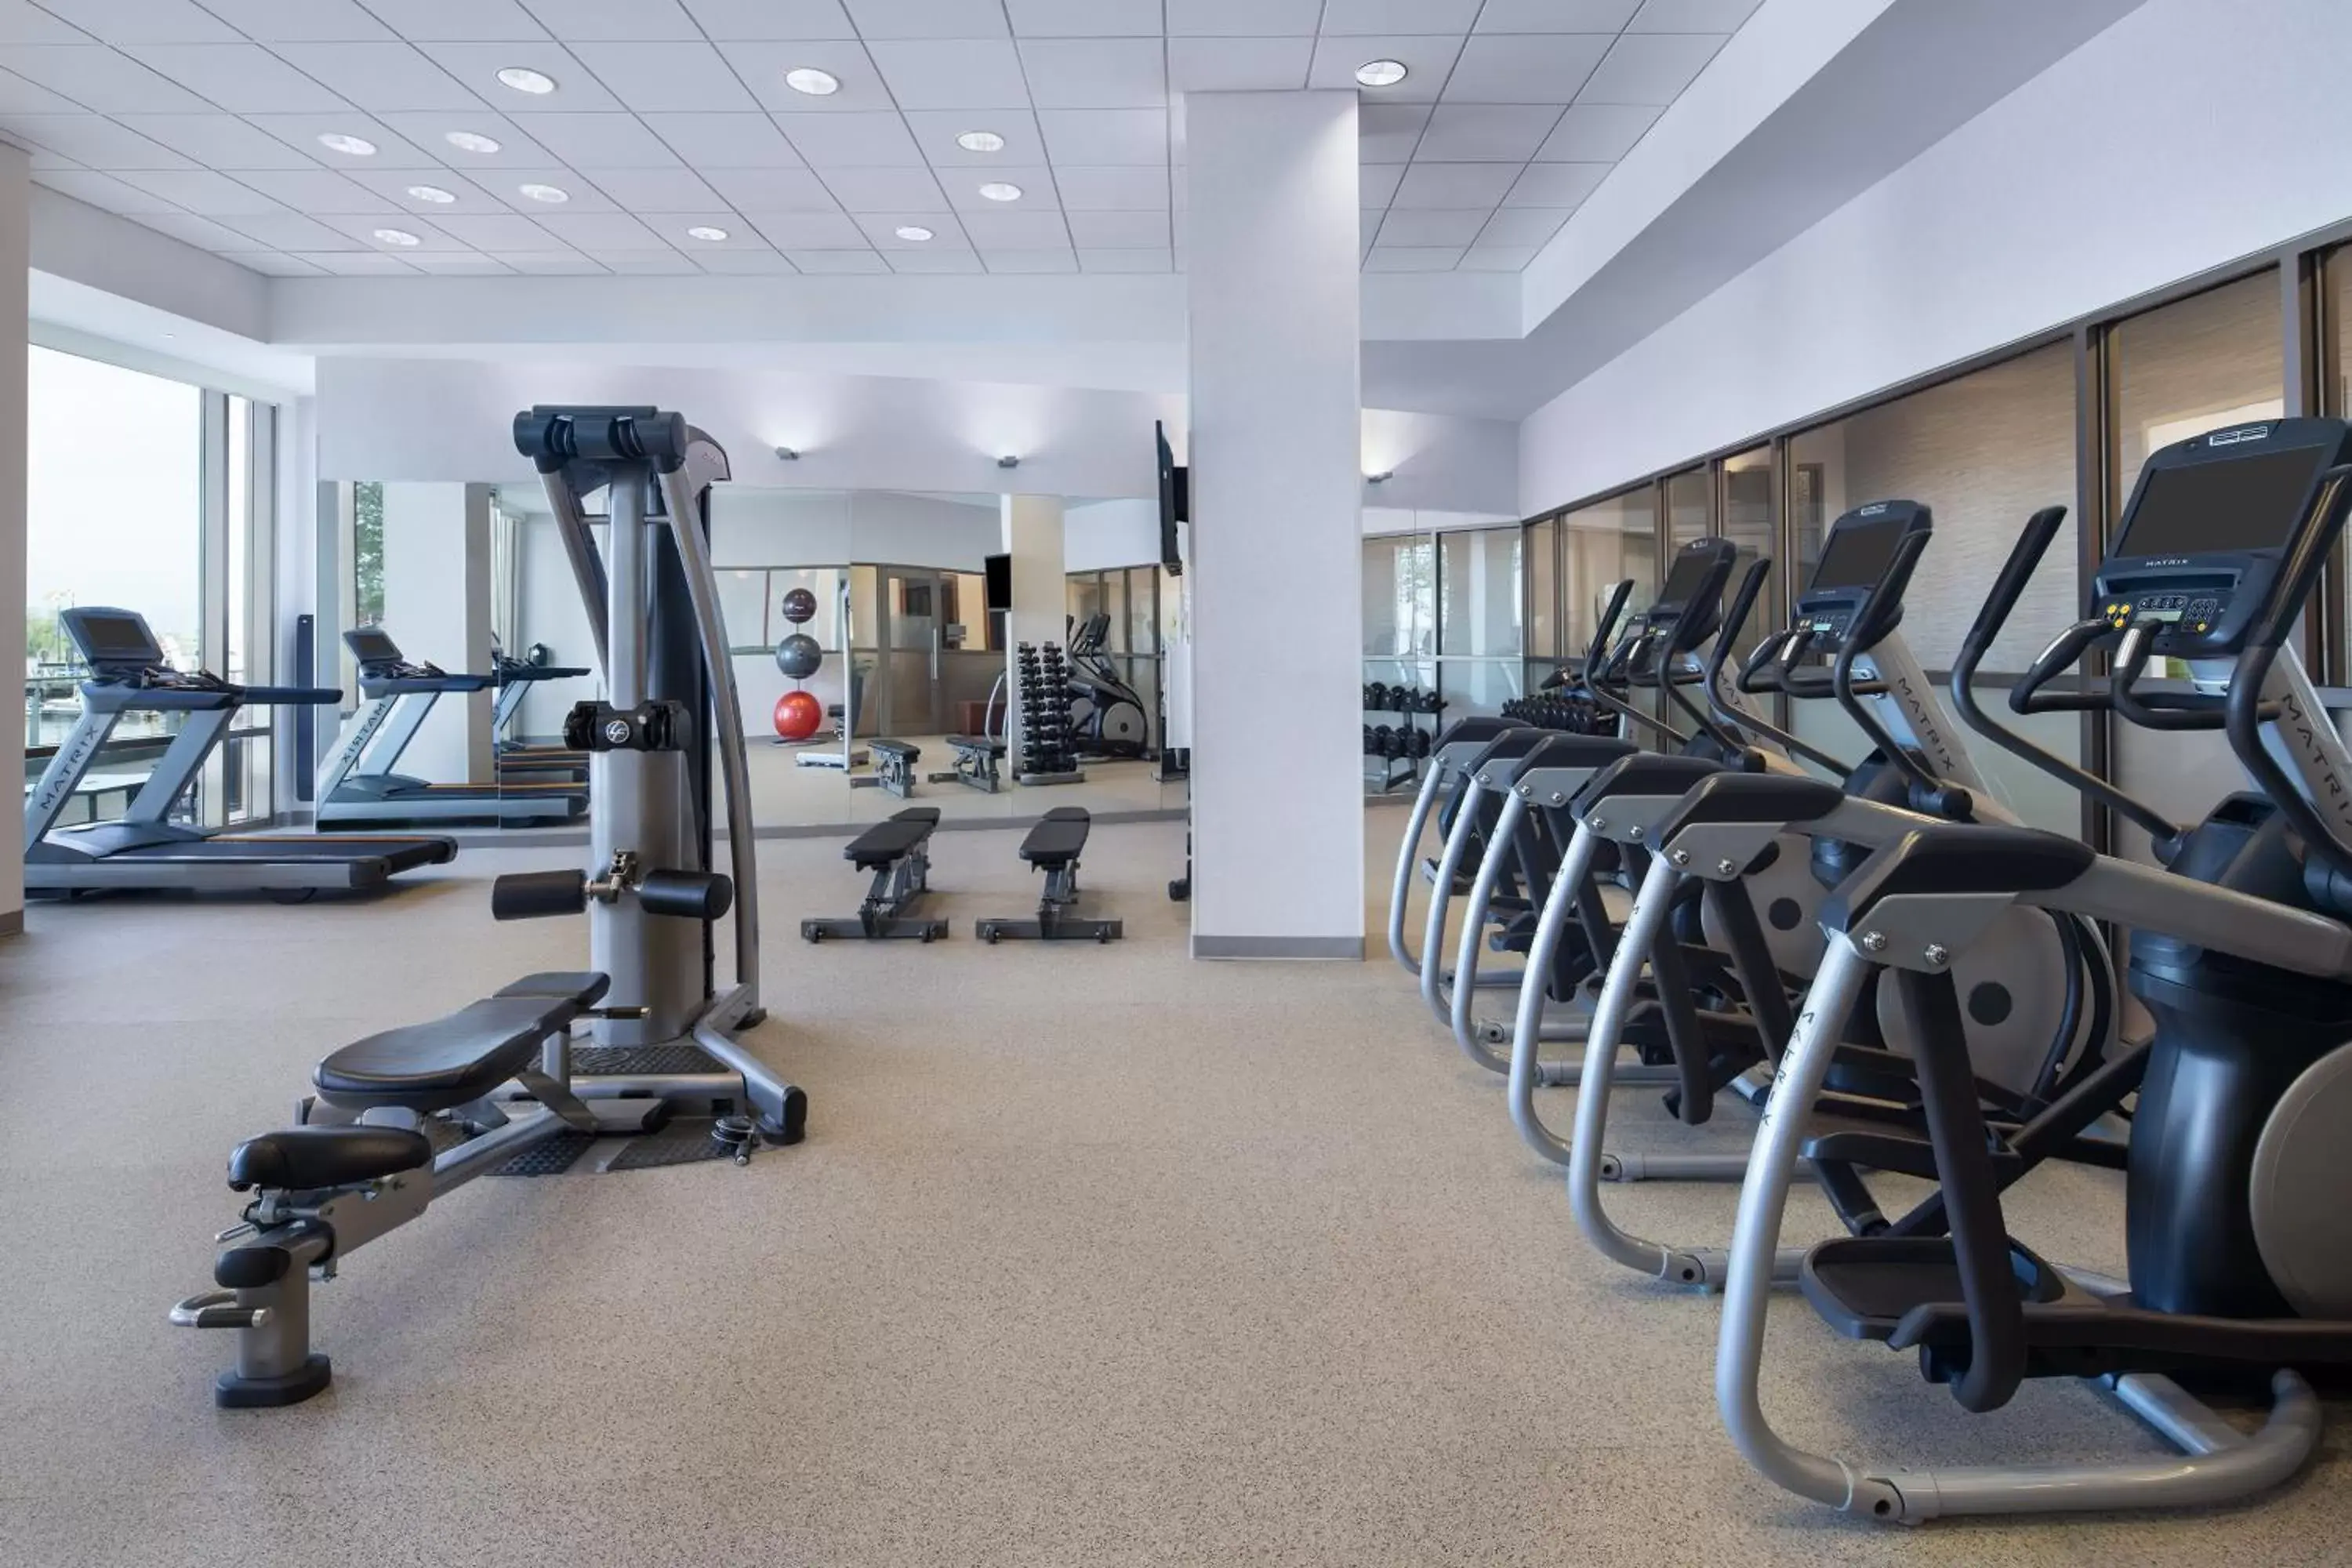 Fitness centre/facilities, Fitness Center/Facilities in The Westin Washington National Harbor